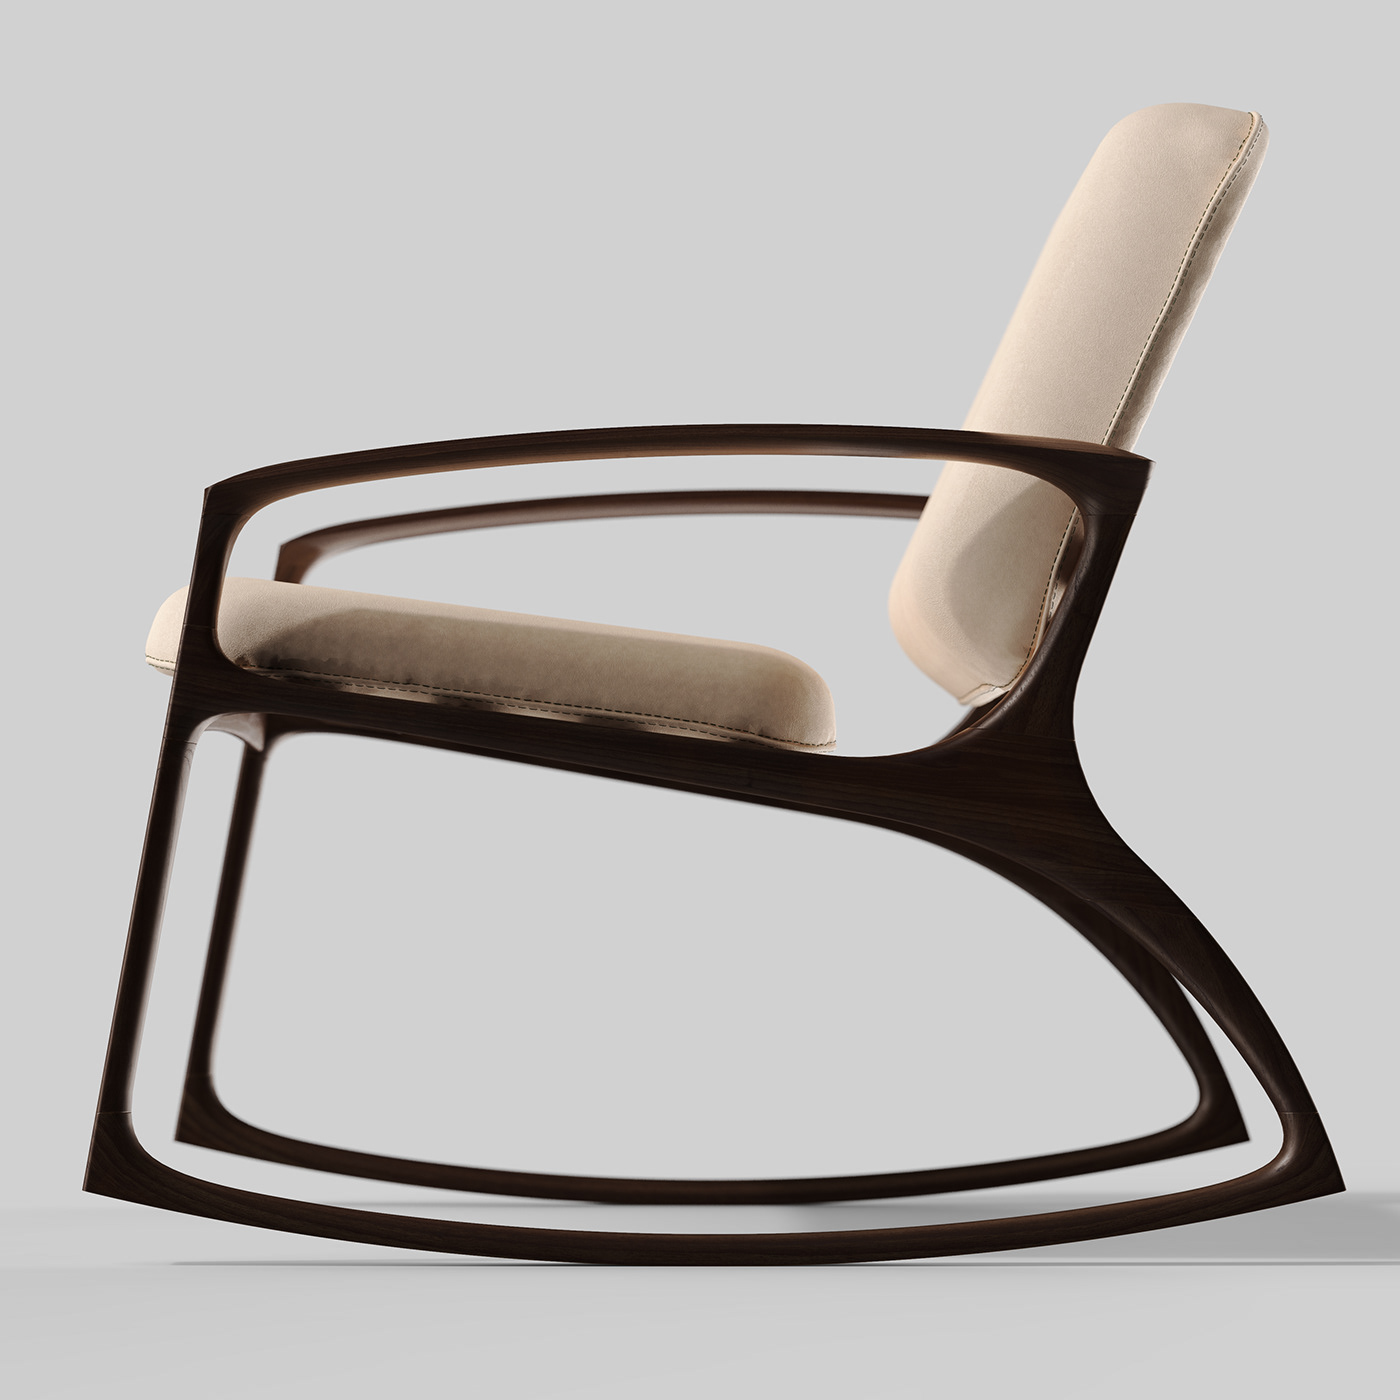 chair craft furniture industrial design  Interior minimal modern product design  Scandinavian wood